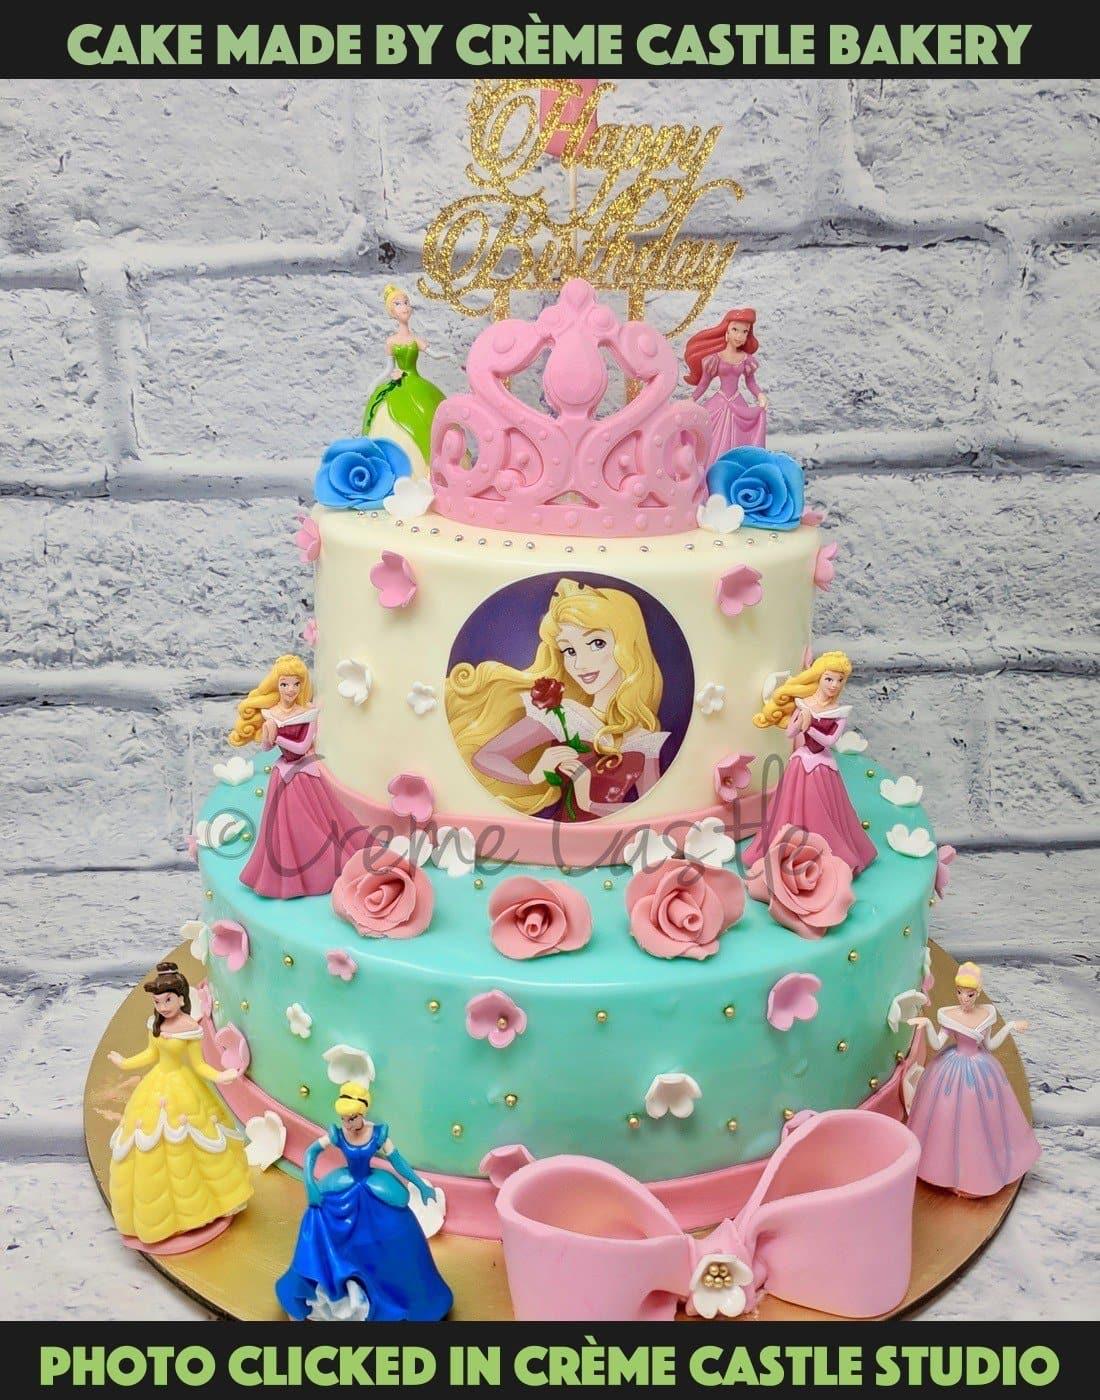 20 Best Princess Cake Ideas - Good Party Ideas